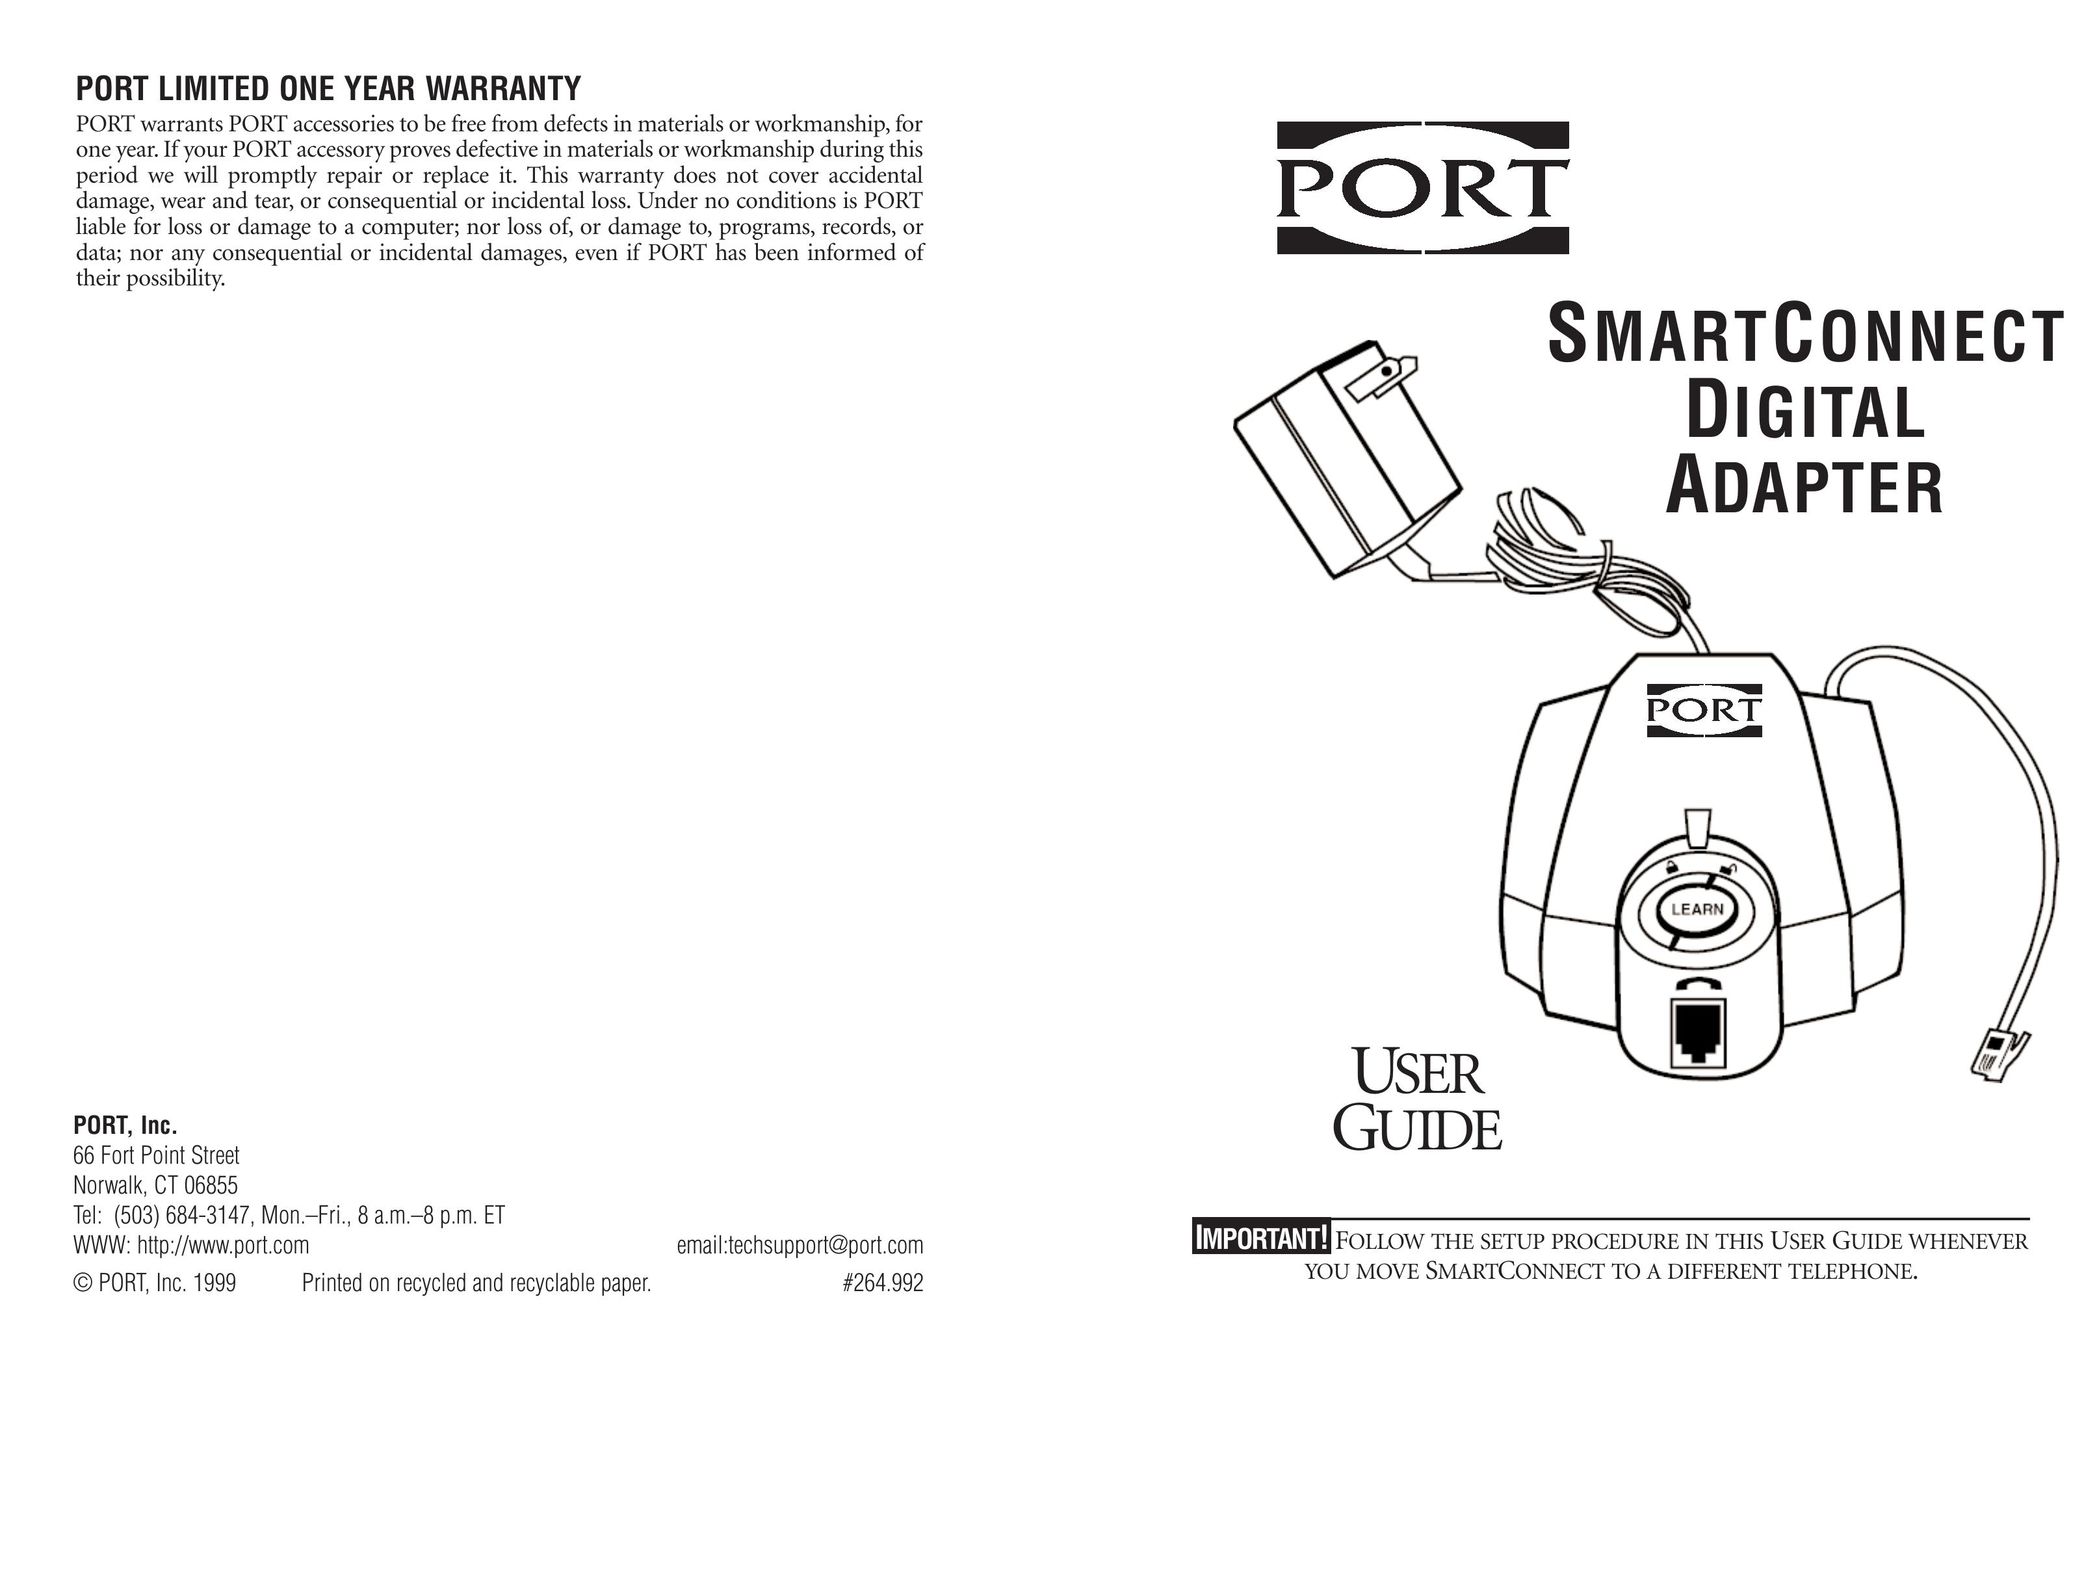 PORT Smart Connect Digital Adapter Network Card User Manual